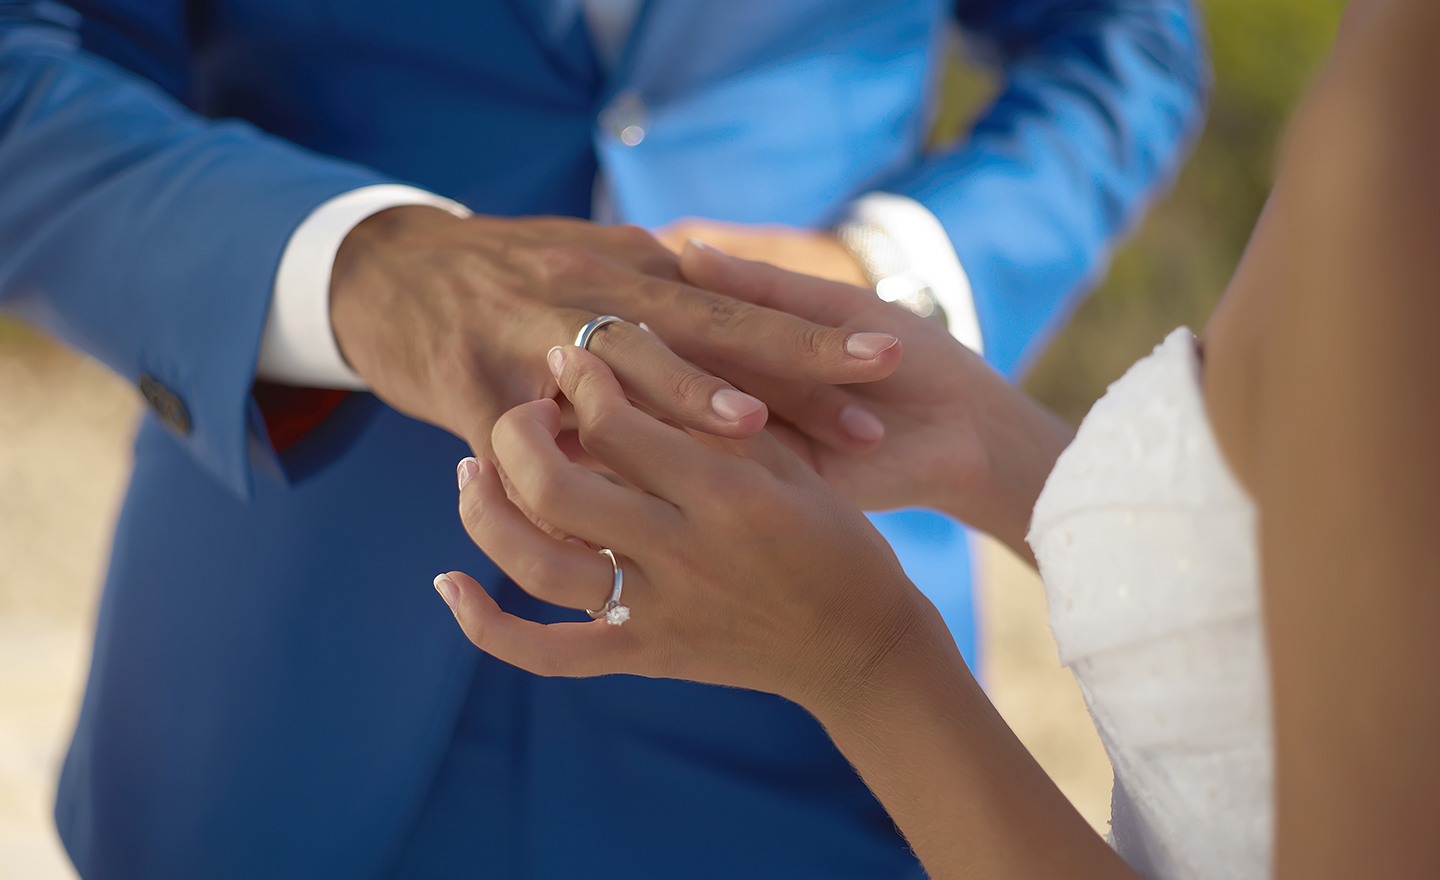 Bride and groom exchange wedding rings at wedding ceremony